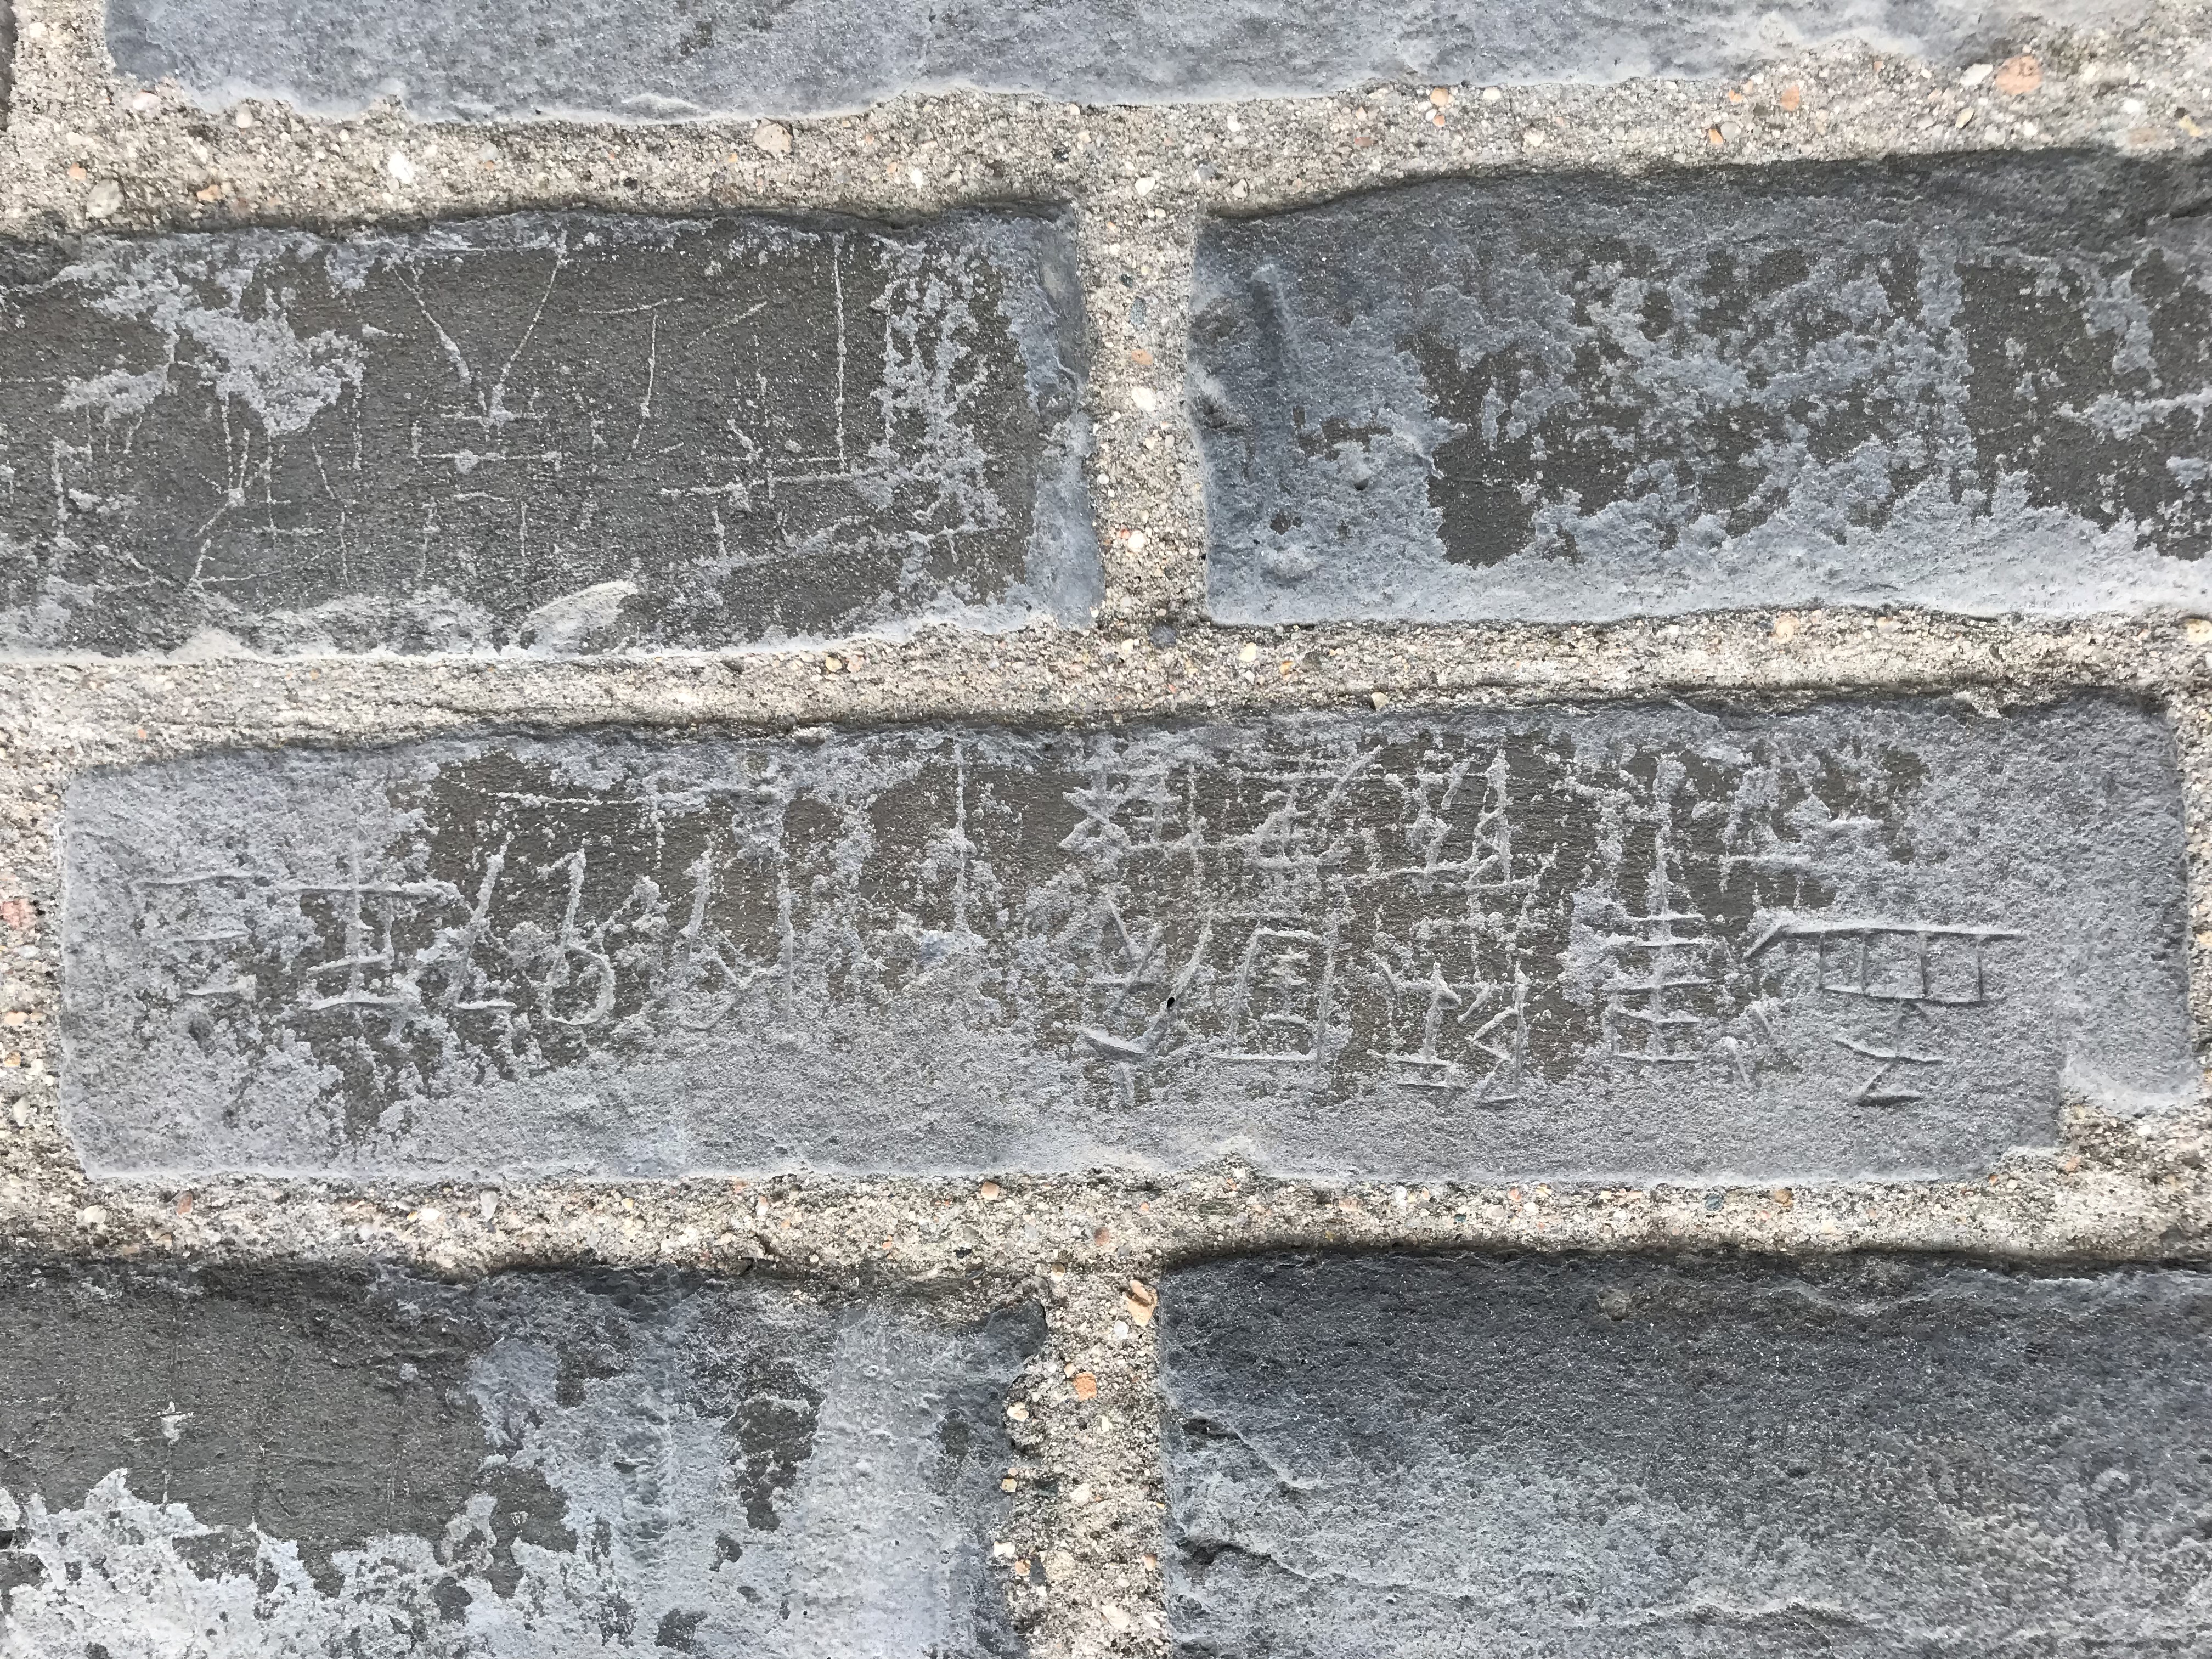 ./2018/03 - Viking China/13 - Xian City Wall/IMG_6541.JPG